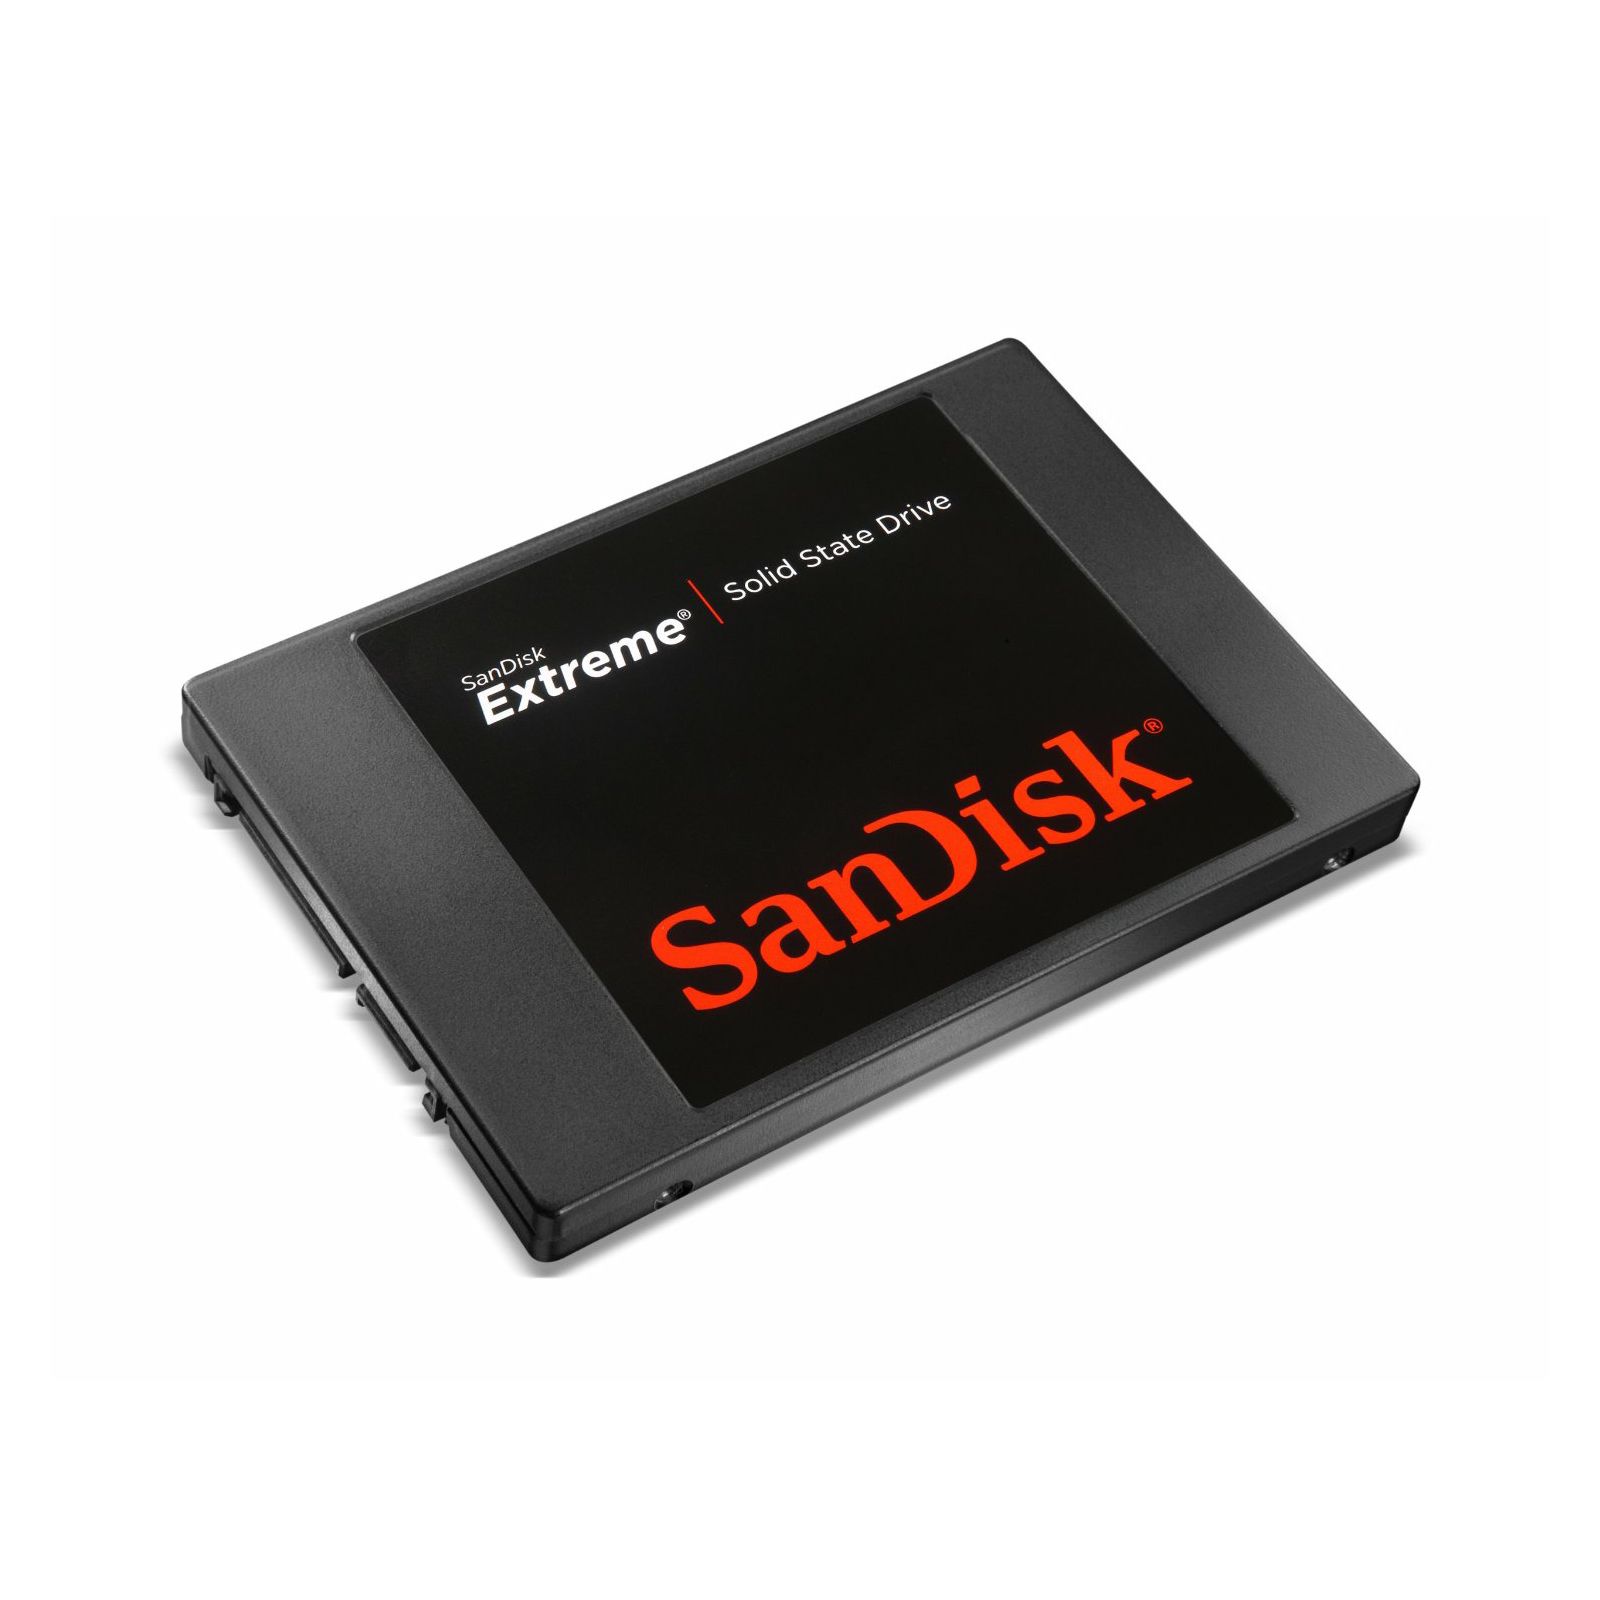 SanDisk SSD Extreme 120GB SDSSDX-120G-G25 Solid State Drive Disk